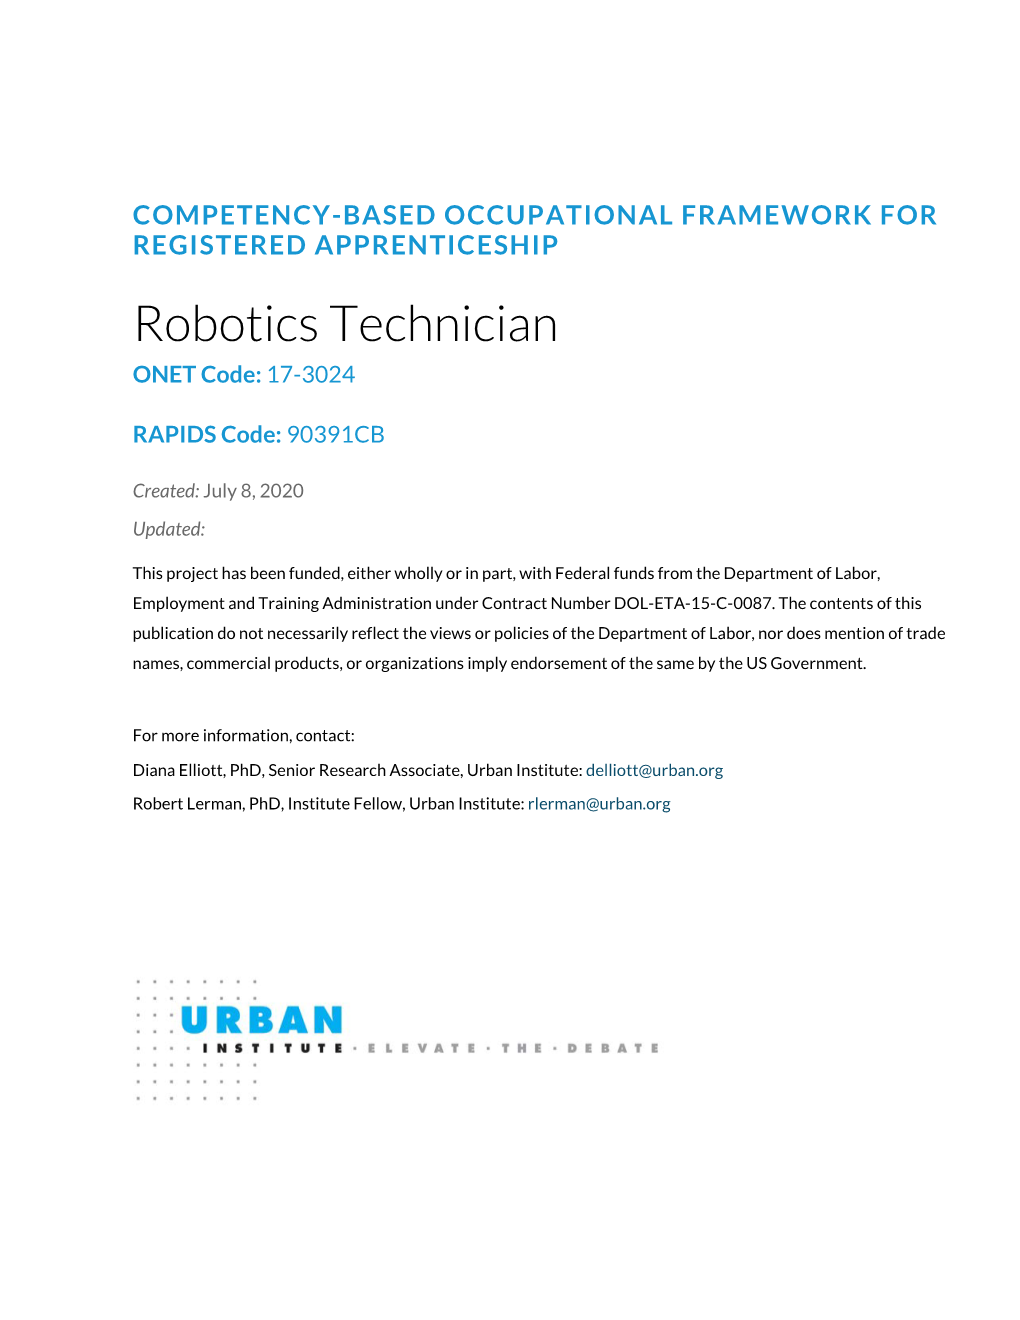 Robotics Technician ONET Code: 17-3024